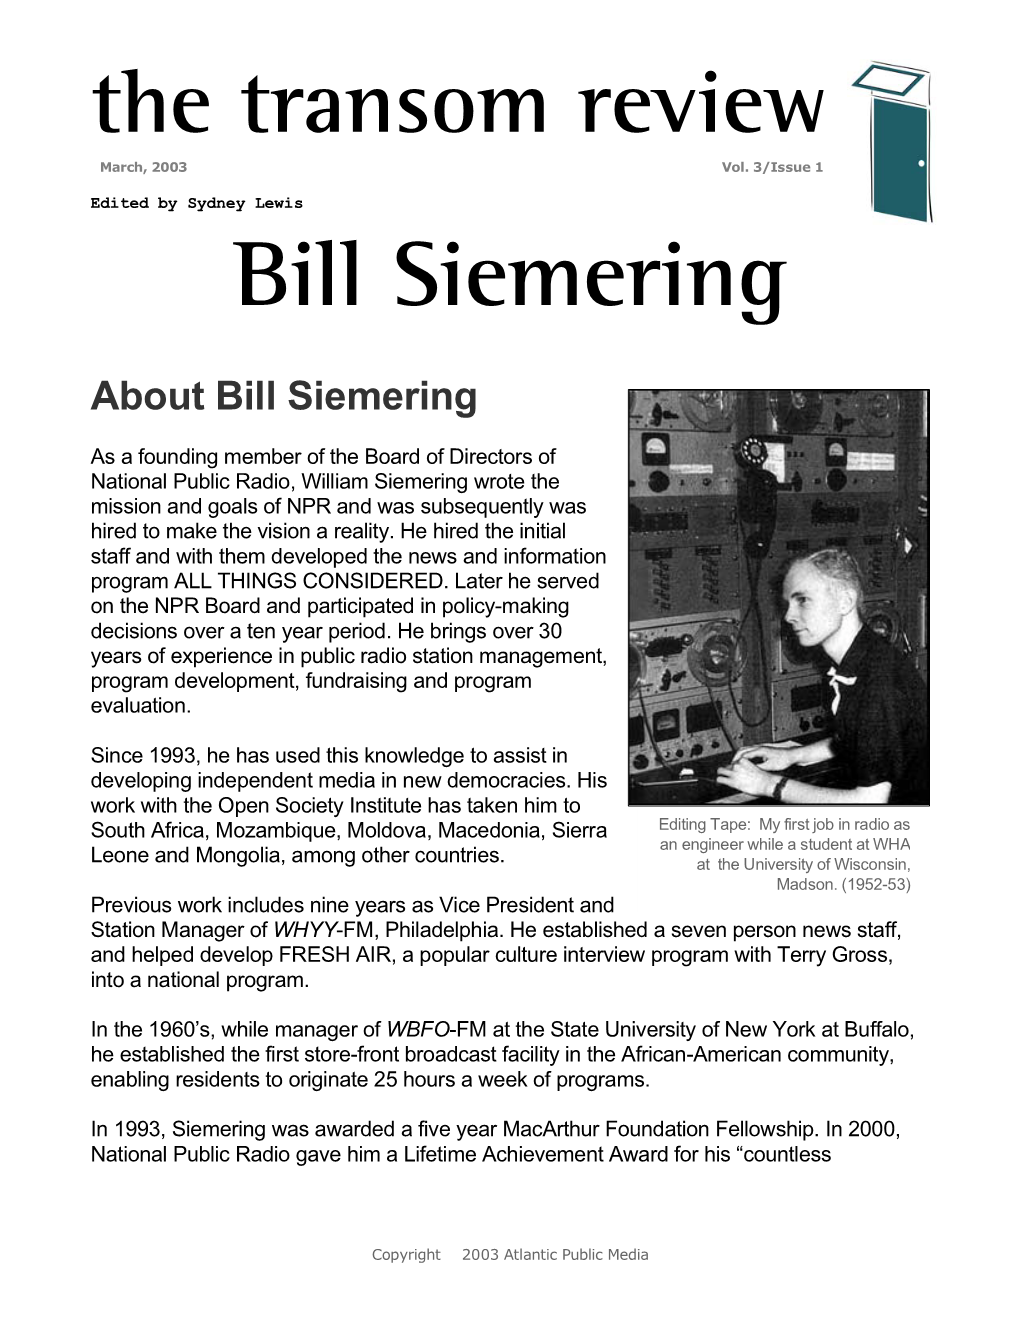 The Transom Review: Bill Siemering